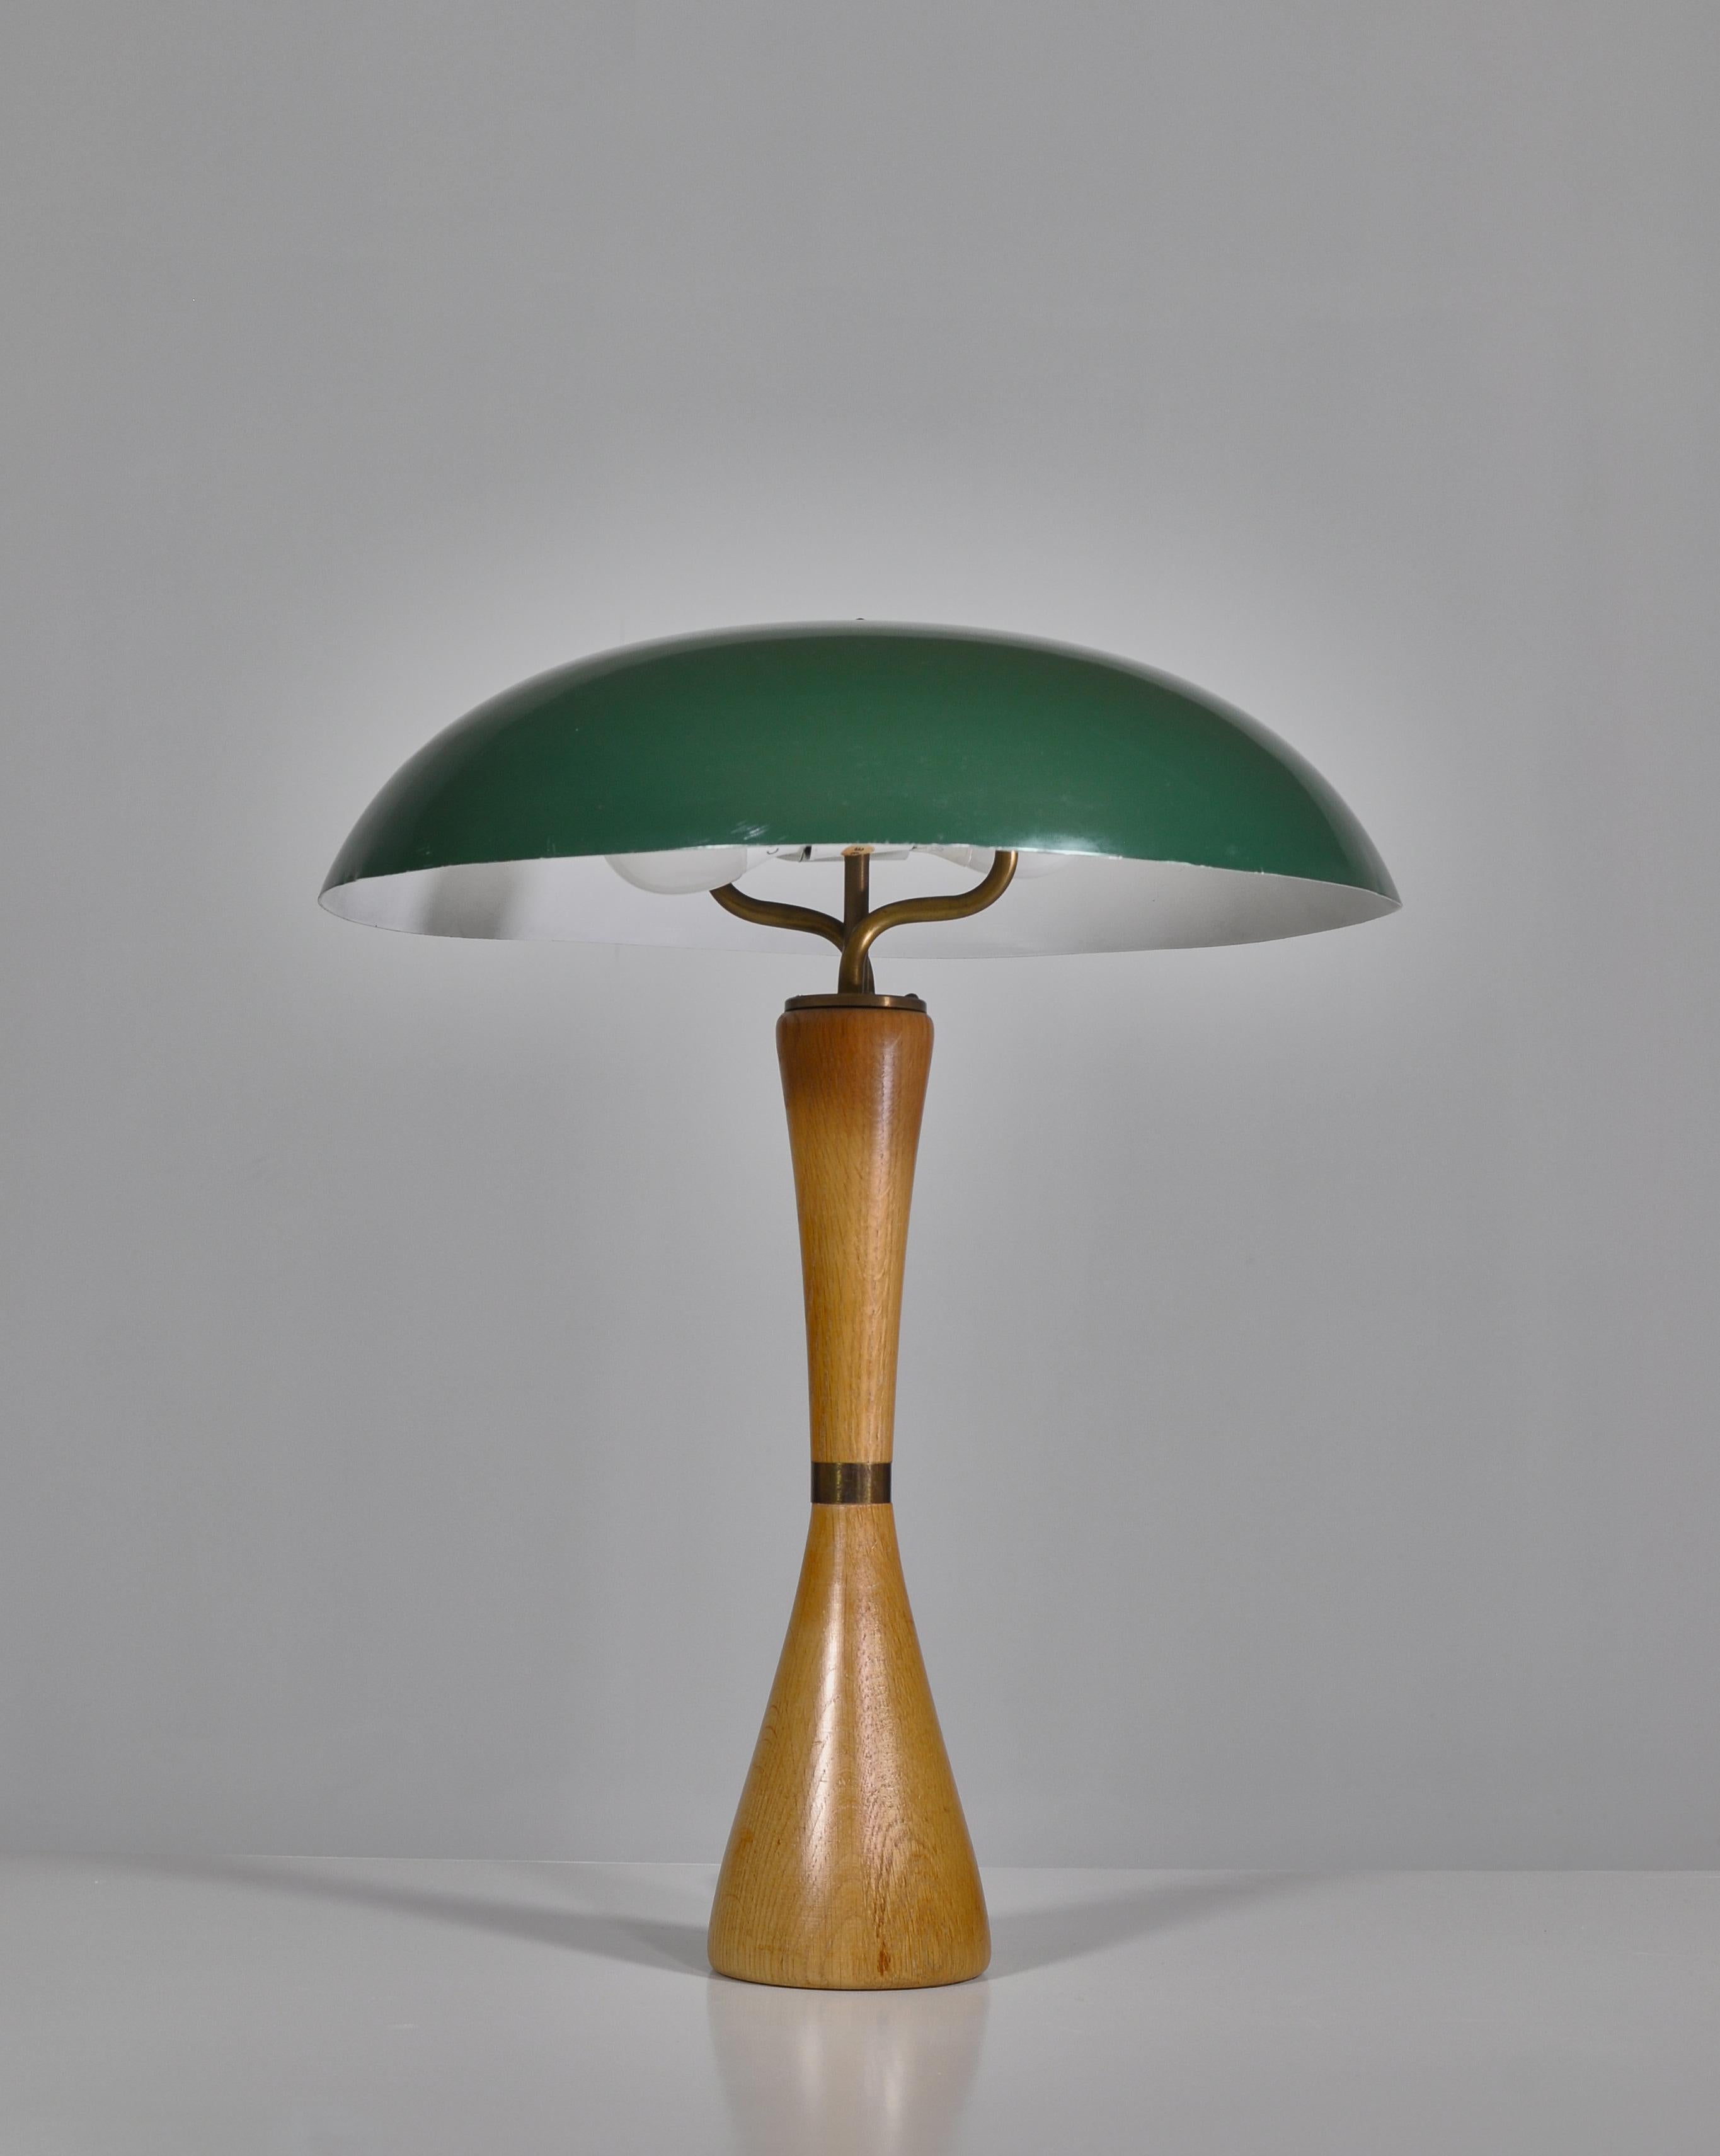 Scandinavian Modern 1950s Hans Bergström Table Lamp with Green Shade Made by ASEA, Sweden